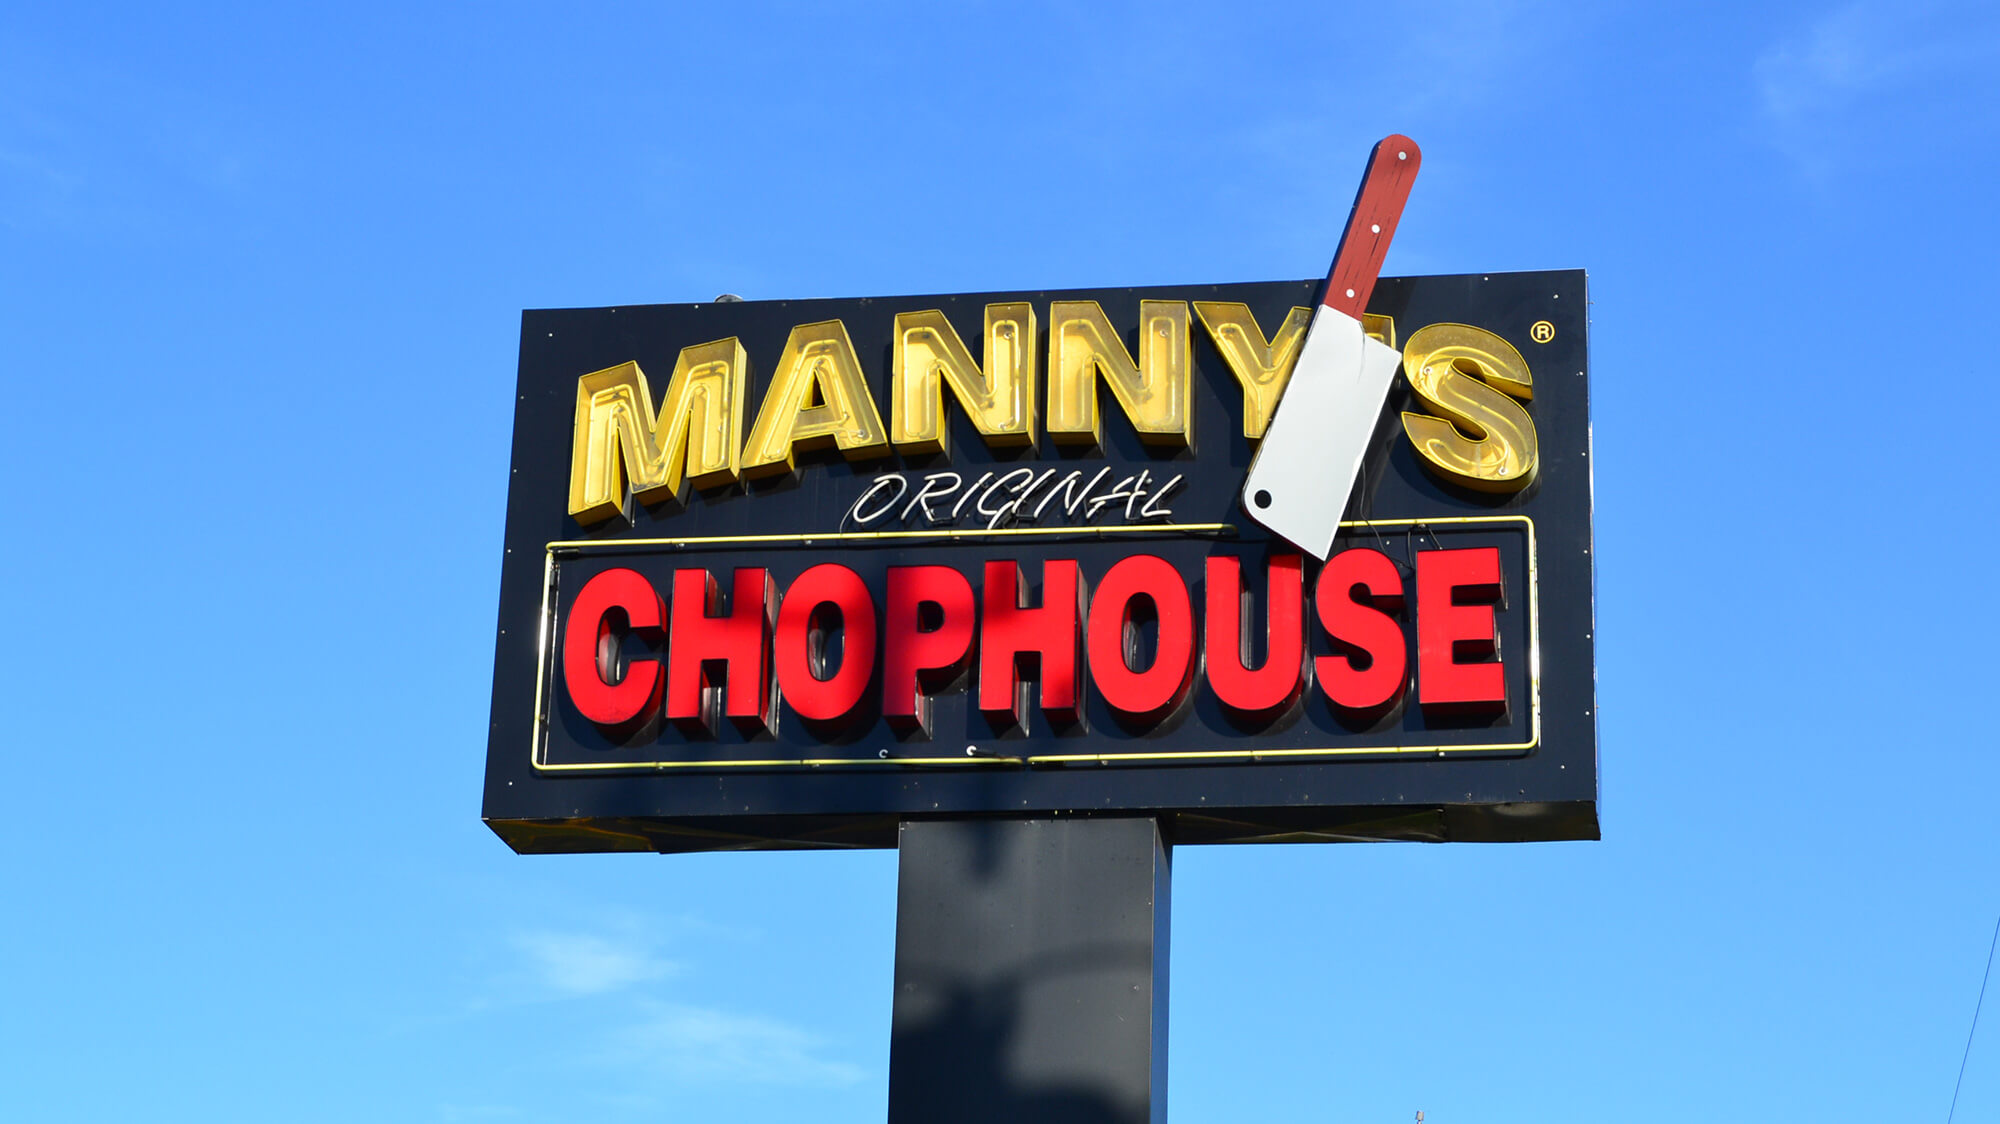 Manny's Original Chophouse sign